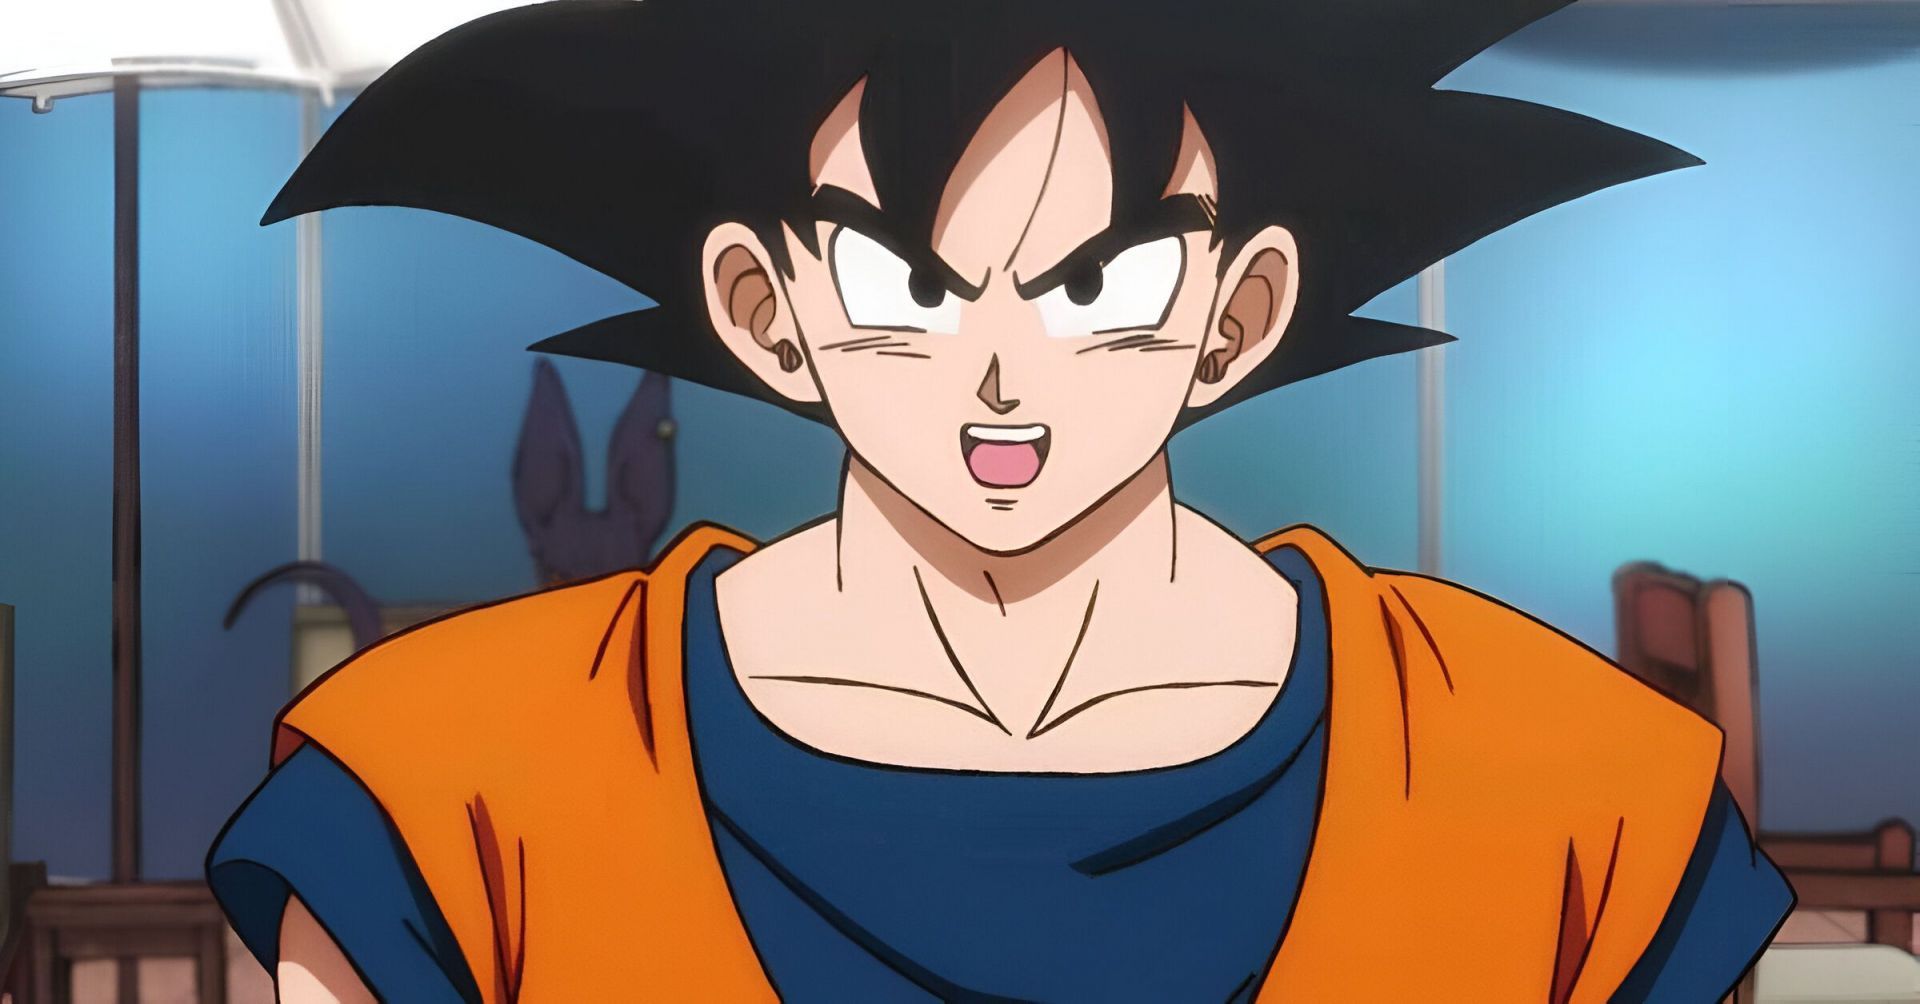 Goku as seen in Dragon Ball Series (Image via Toei Animation)